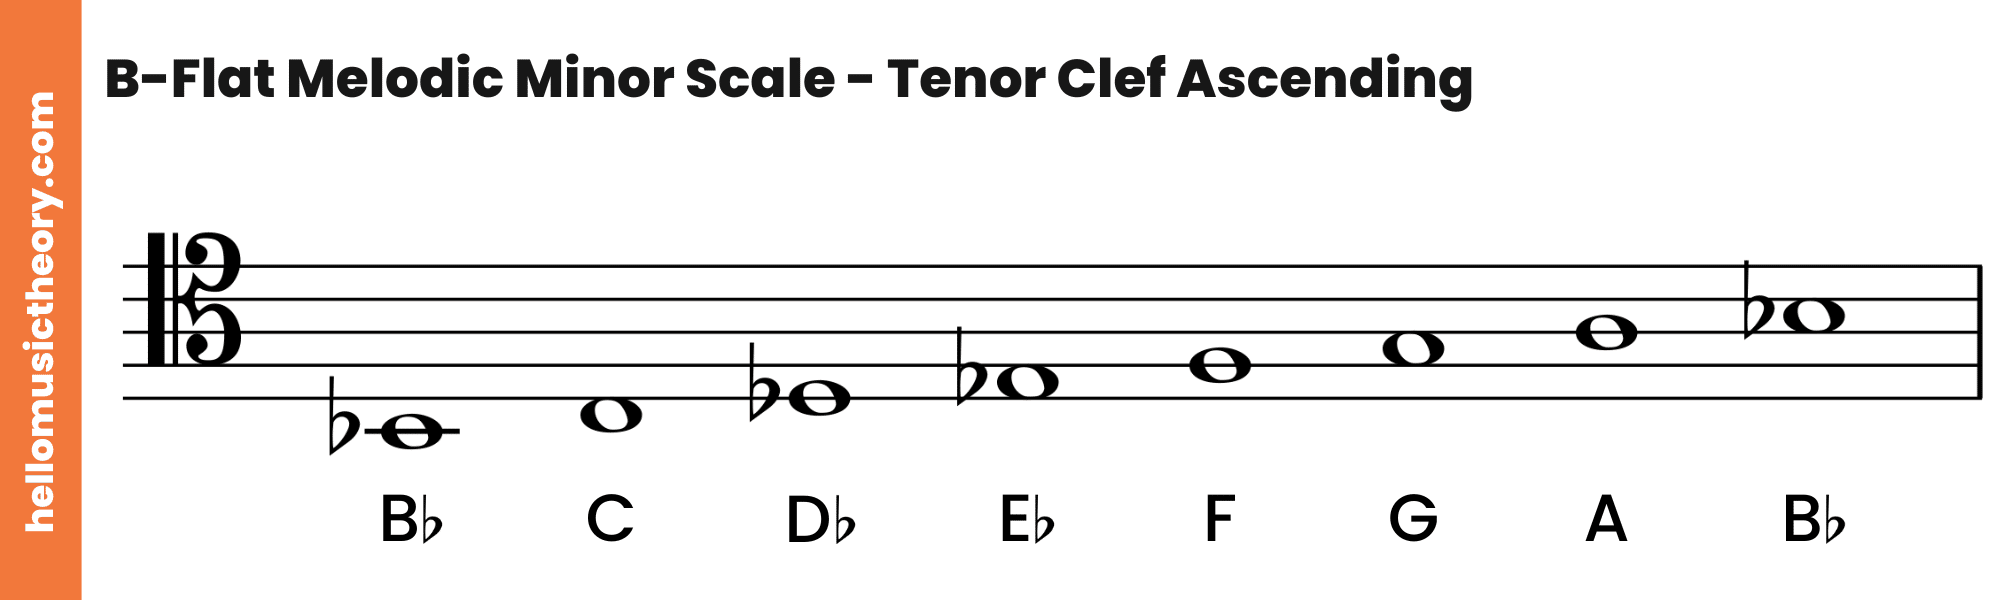 B-Flat Melodic Minor Scale Tenor Clef Ascending